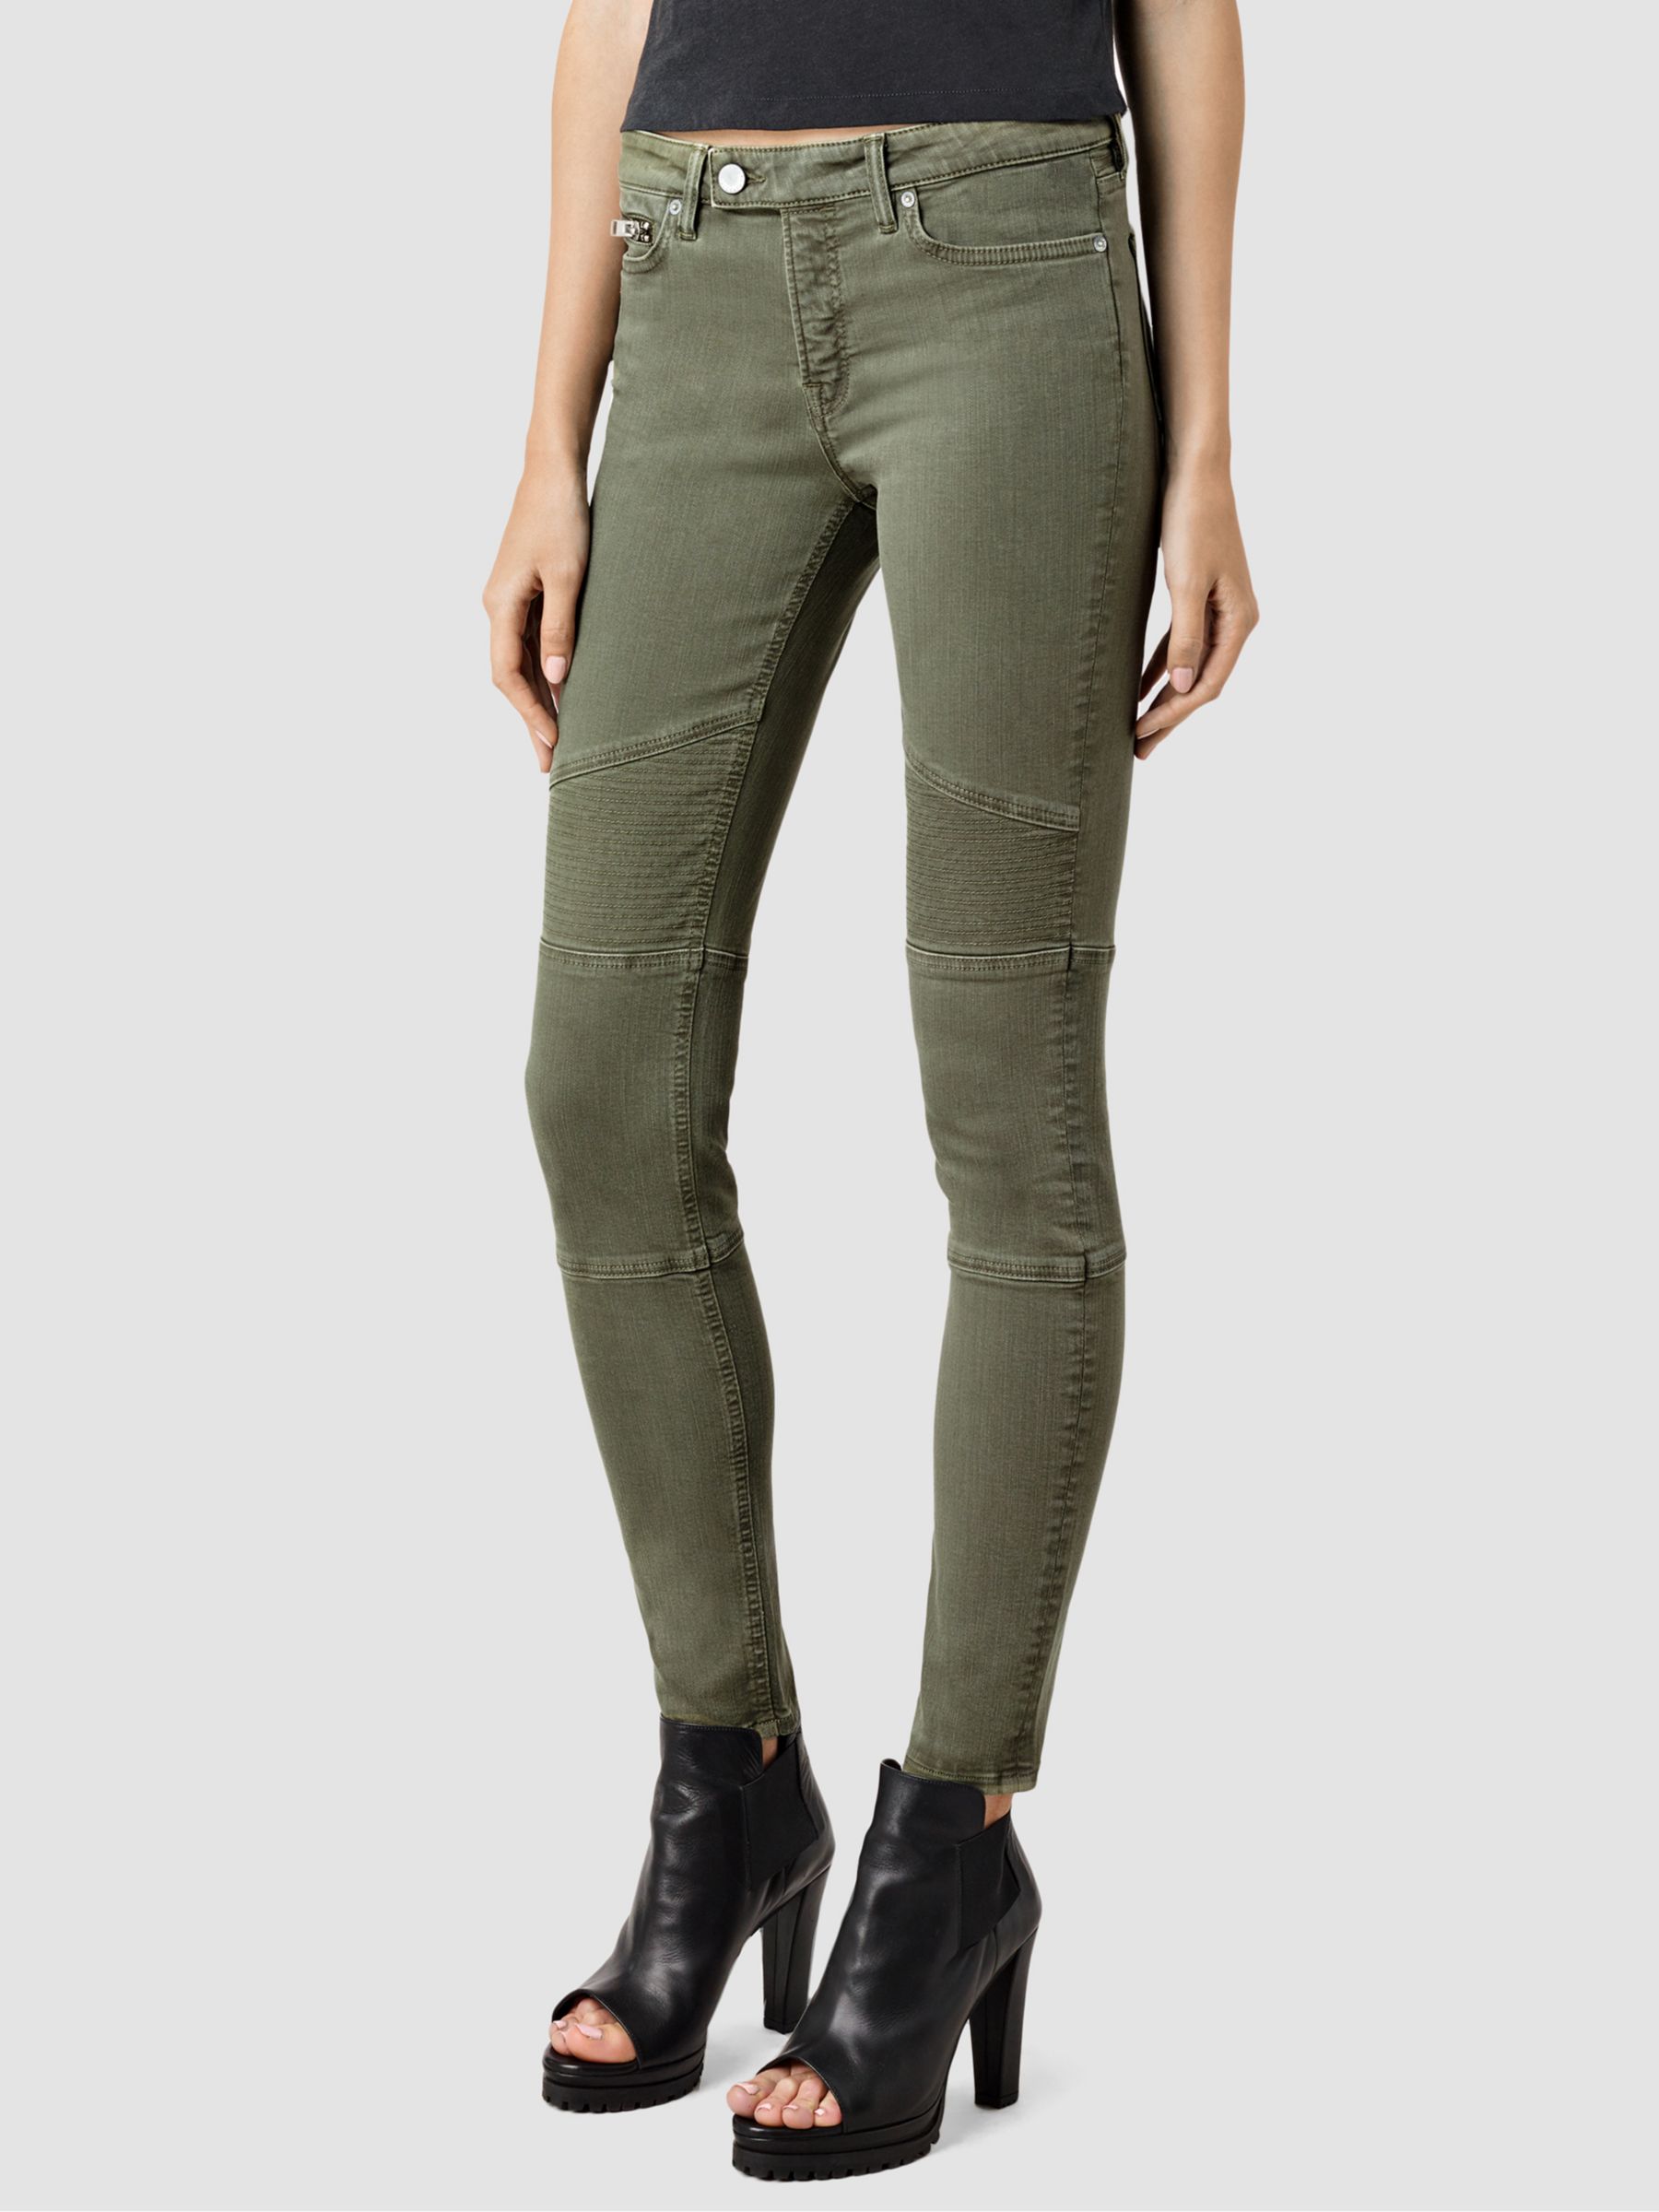 green khaki jeans womens